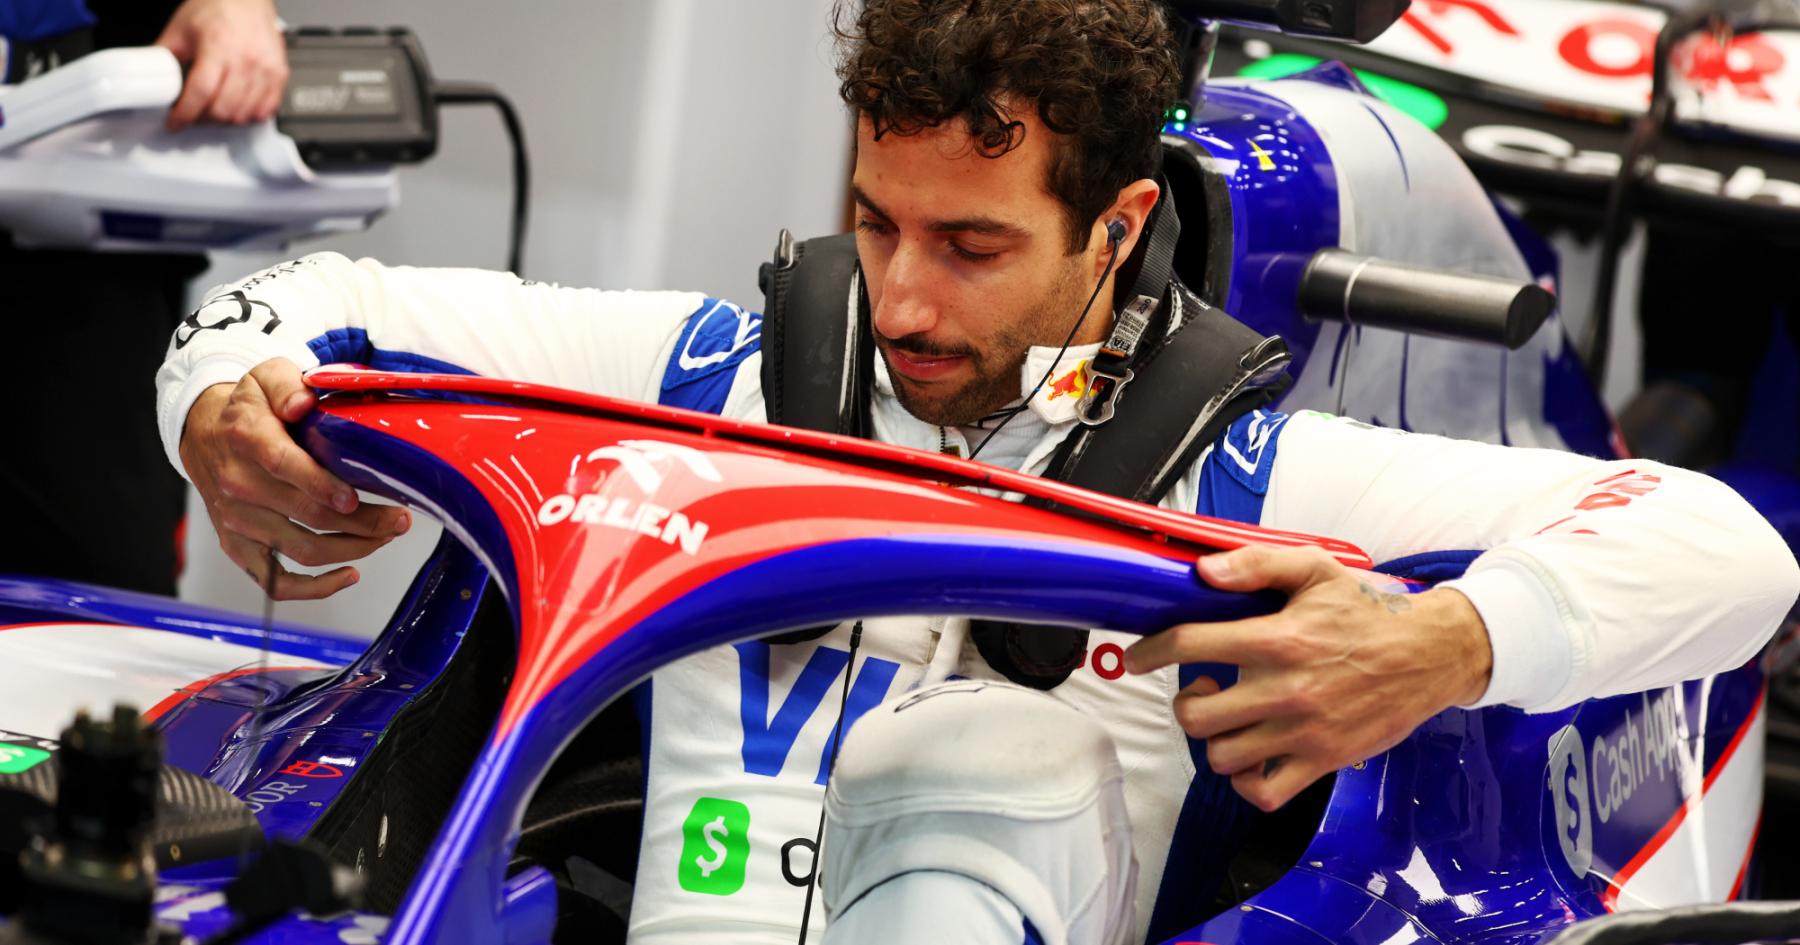 Dismal Decline: The Fading Glory of Daniel Ricciardo in F1